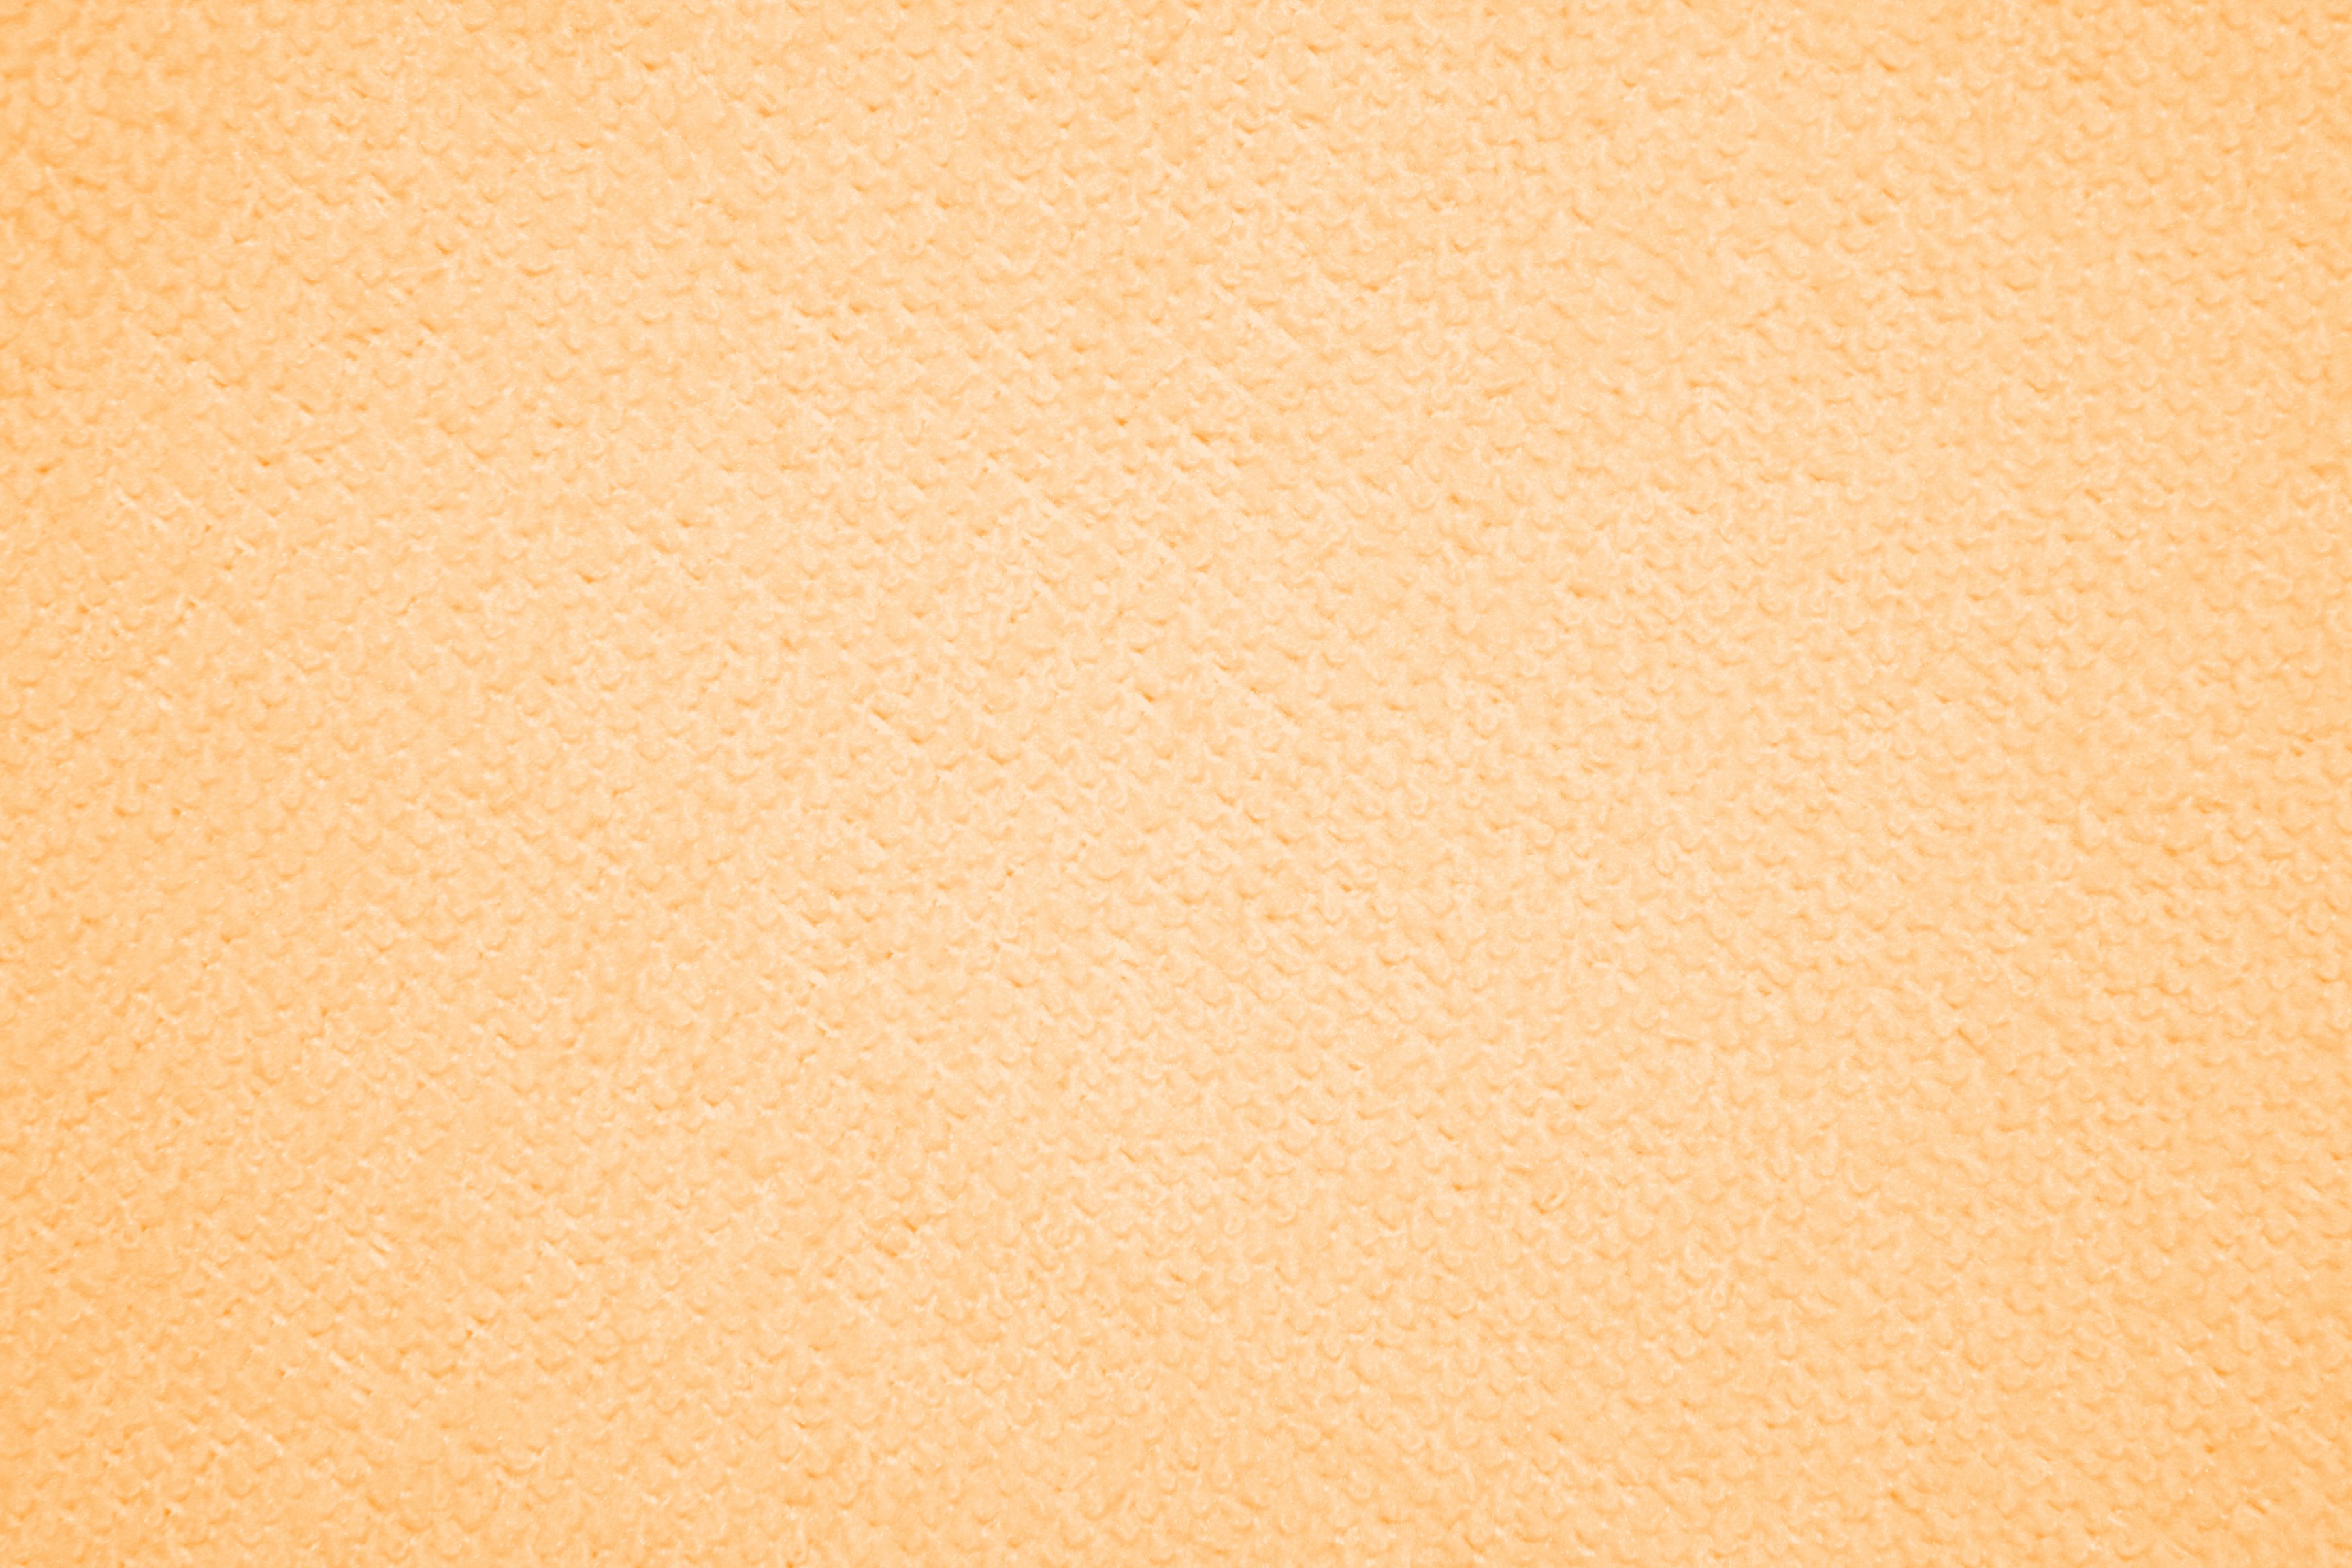 Peach or Light Orange Microfiber Cloth Fabric Texture Picture Free